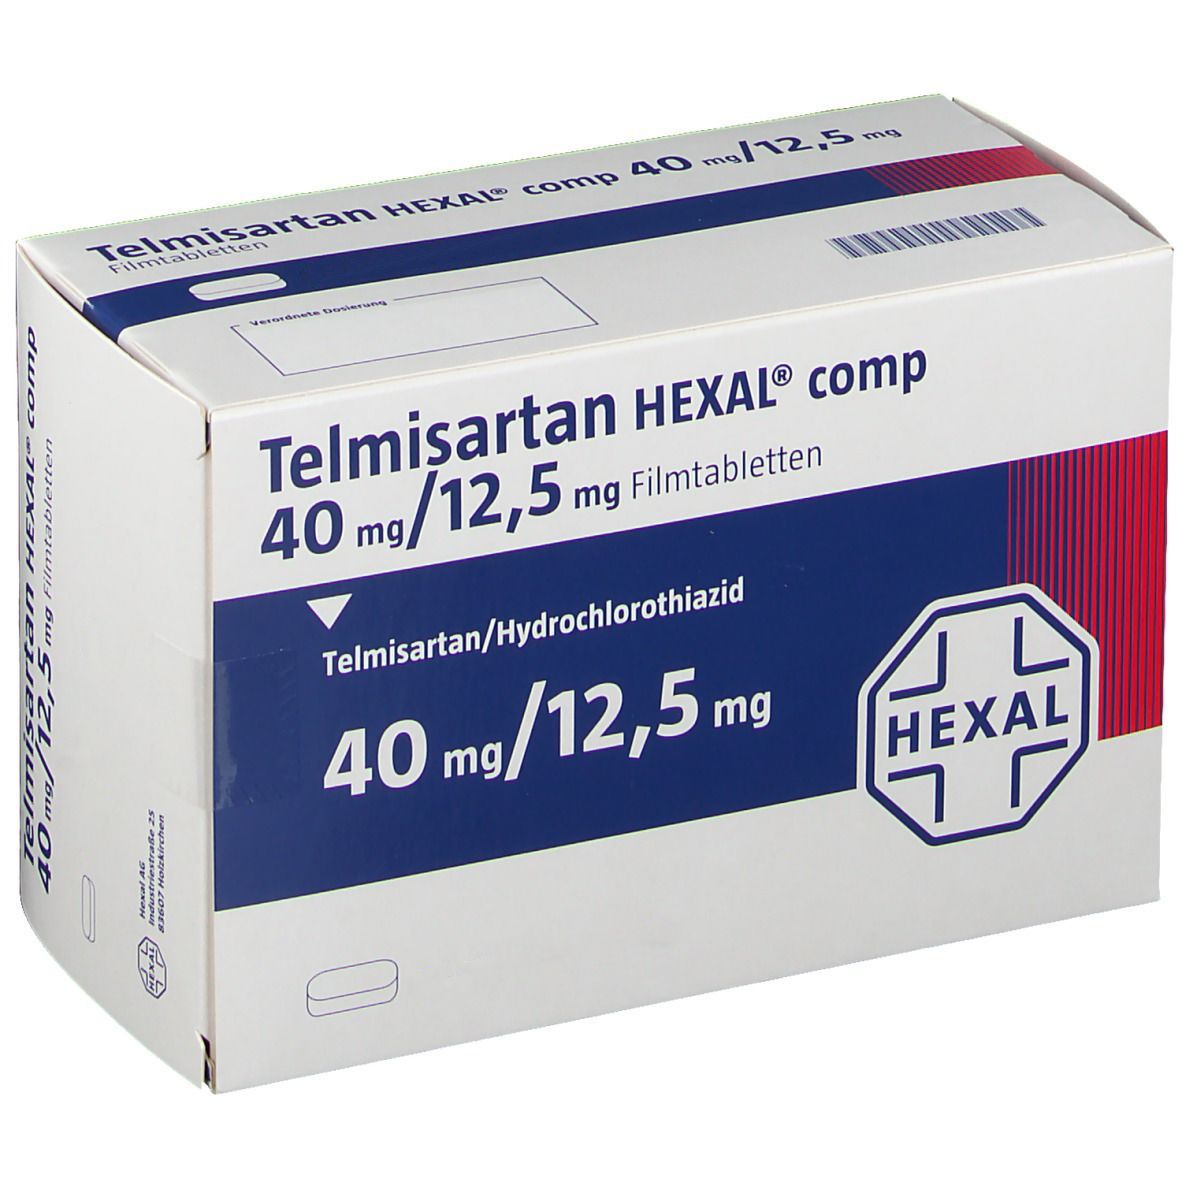 Telmisartan HEXAL® comp 40 mg/12,5 mg